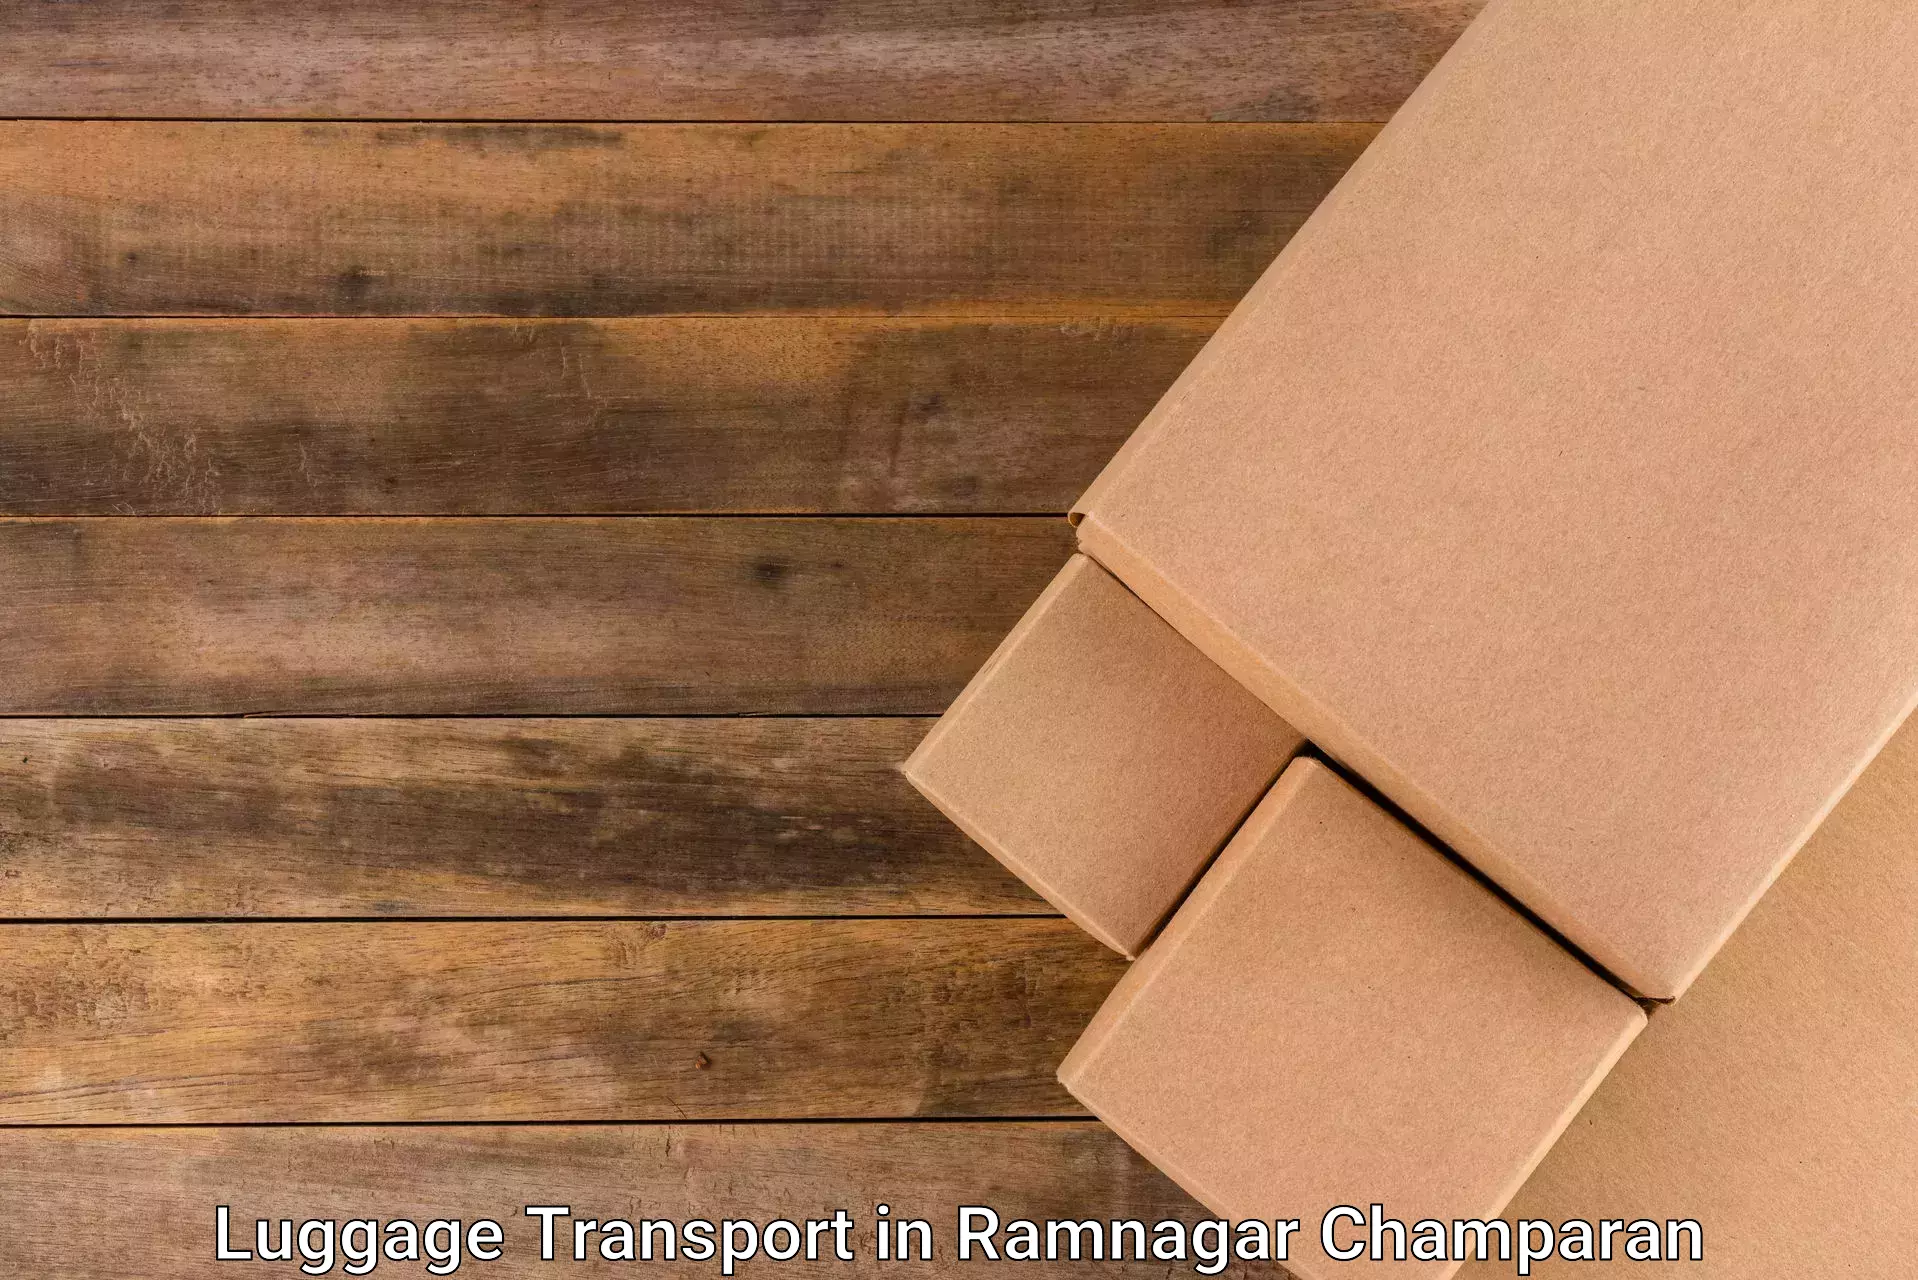 Luggage transport tips in Ramnagar Champaran